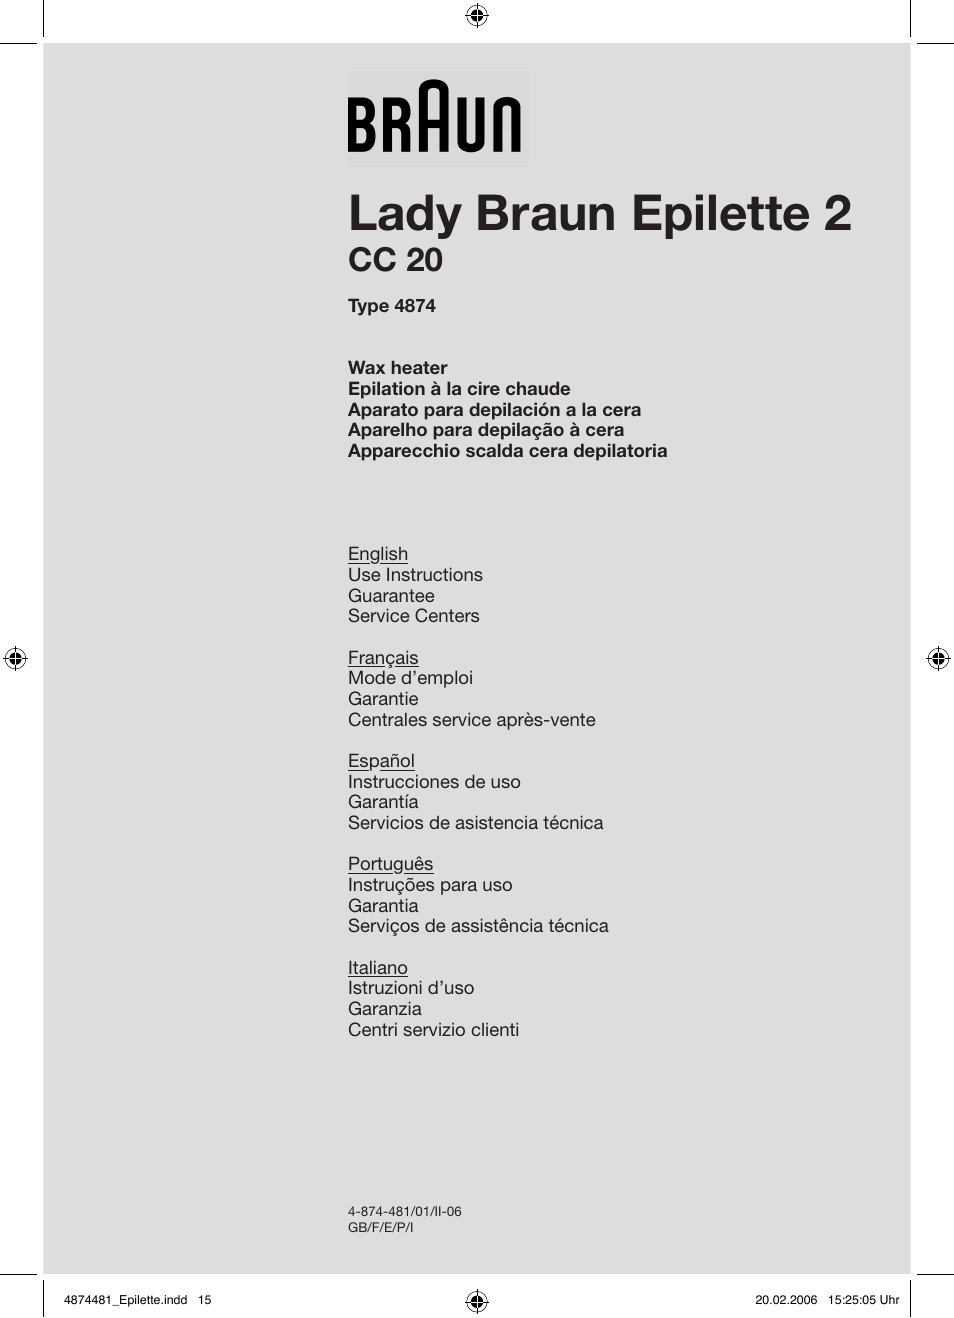 Braun CC20 Lady Braun Epilette 2 User Manual | 13 pages